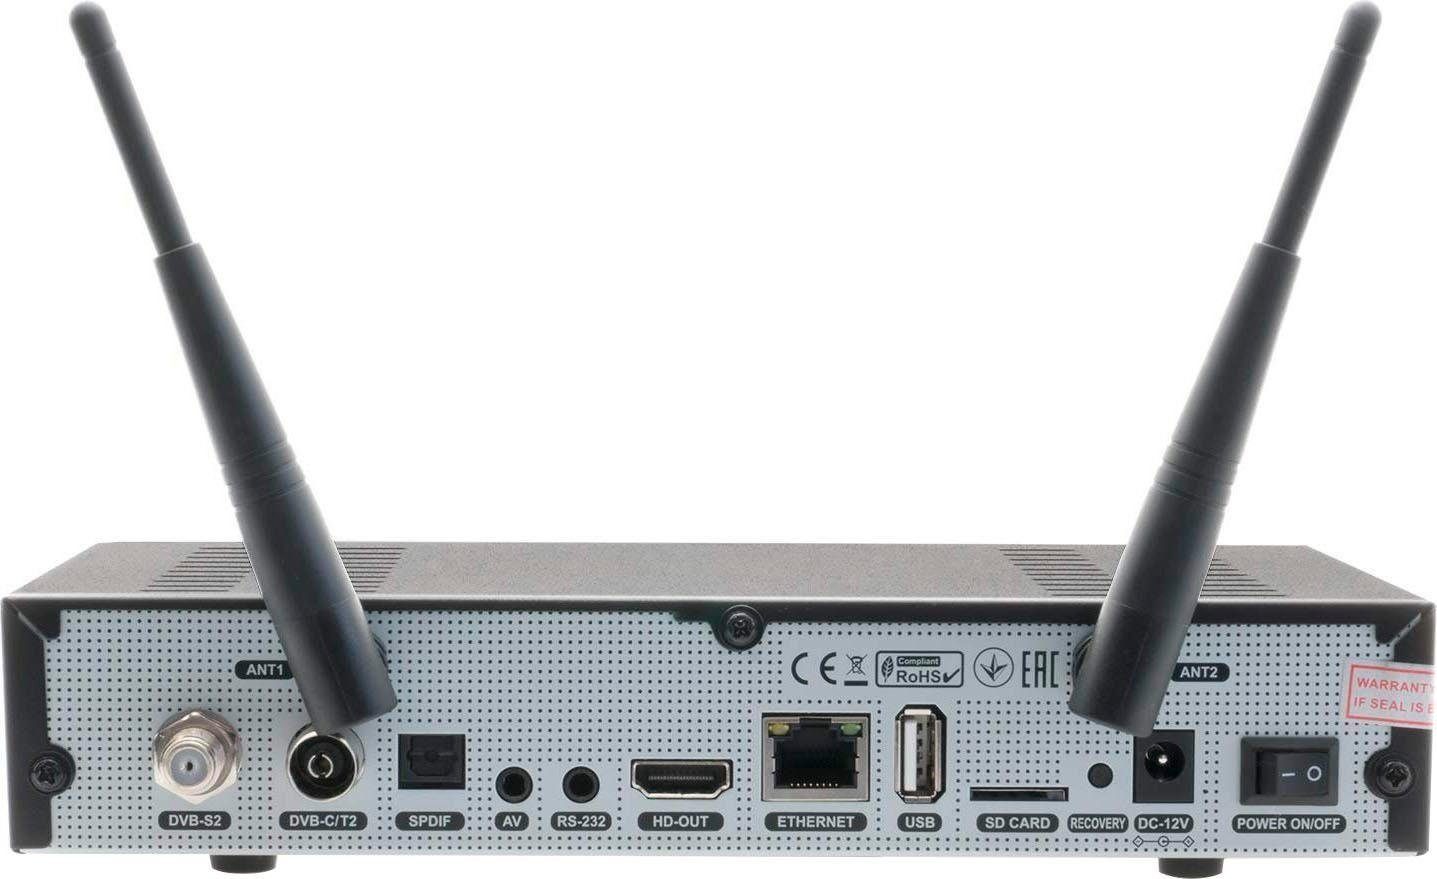 WLAN) Receiver SF8008 DVB-T2 OCTAGON (Ethernet), (LAN HD